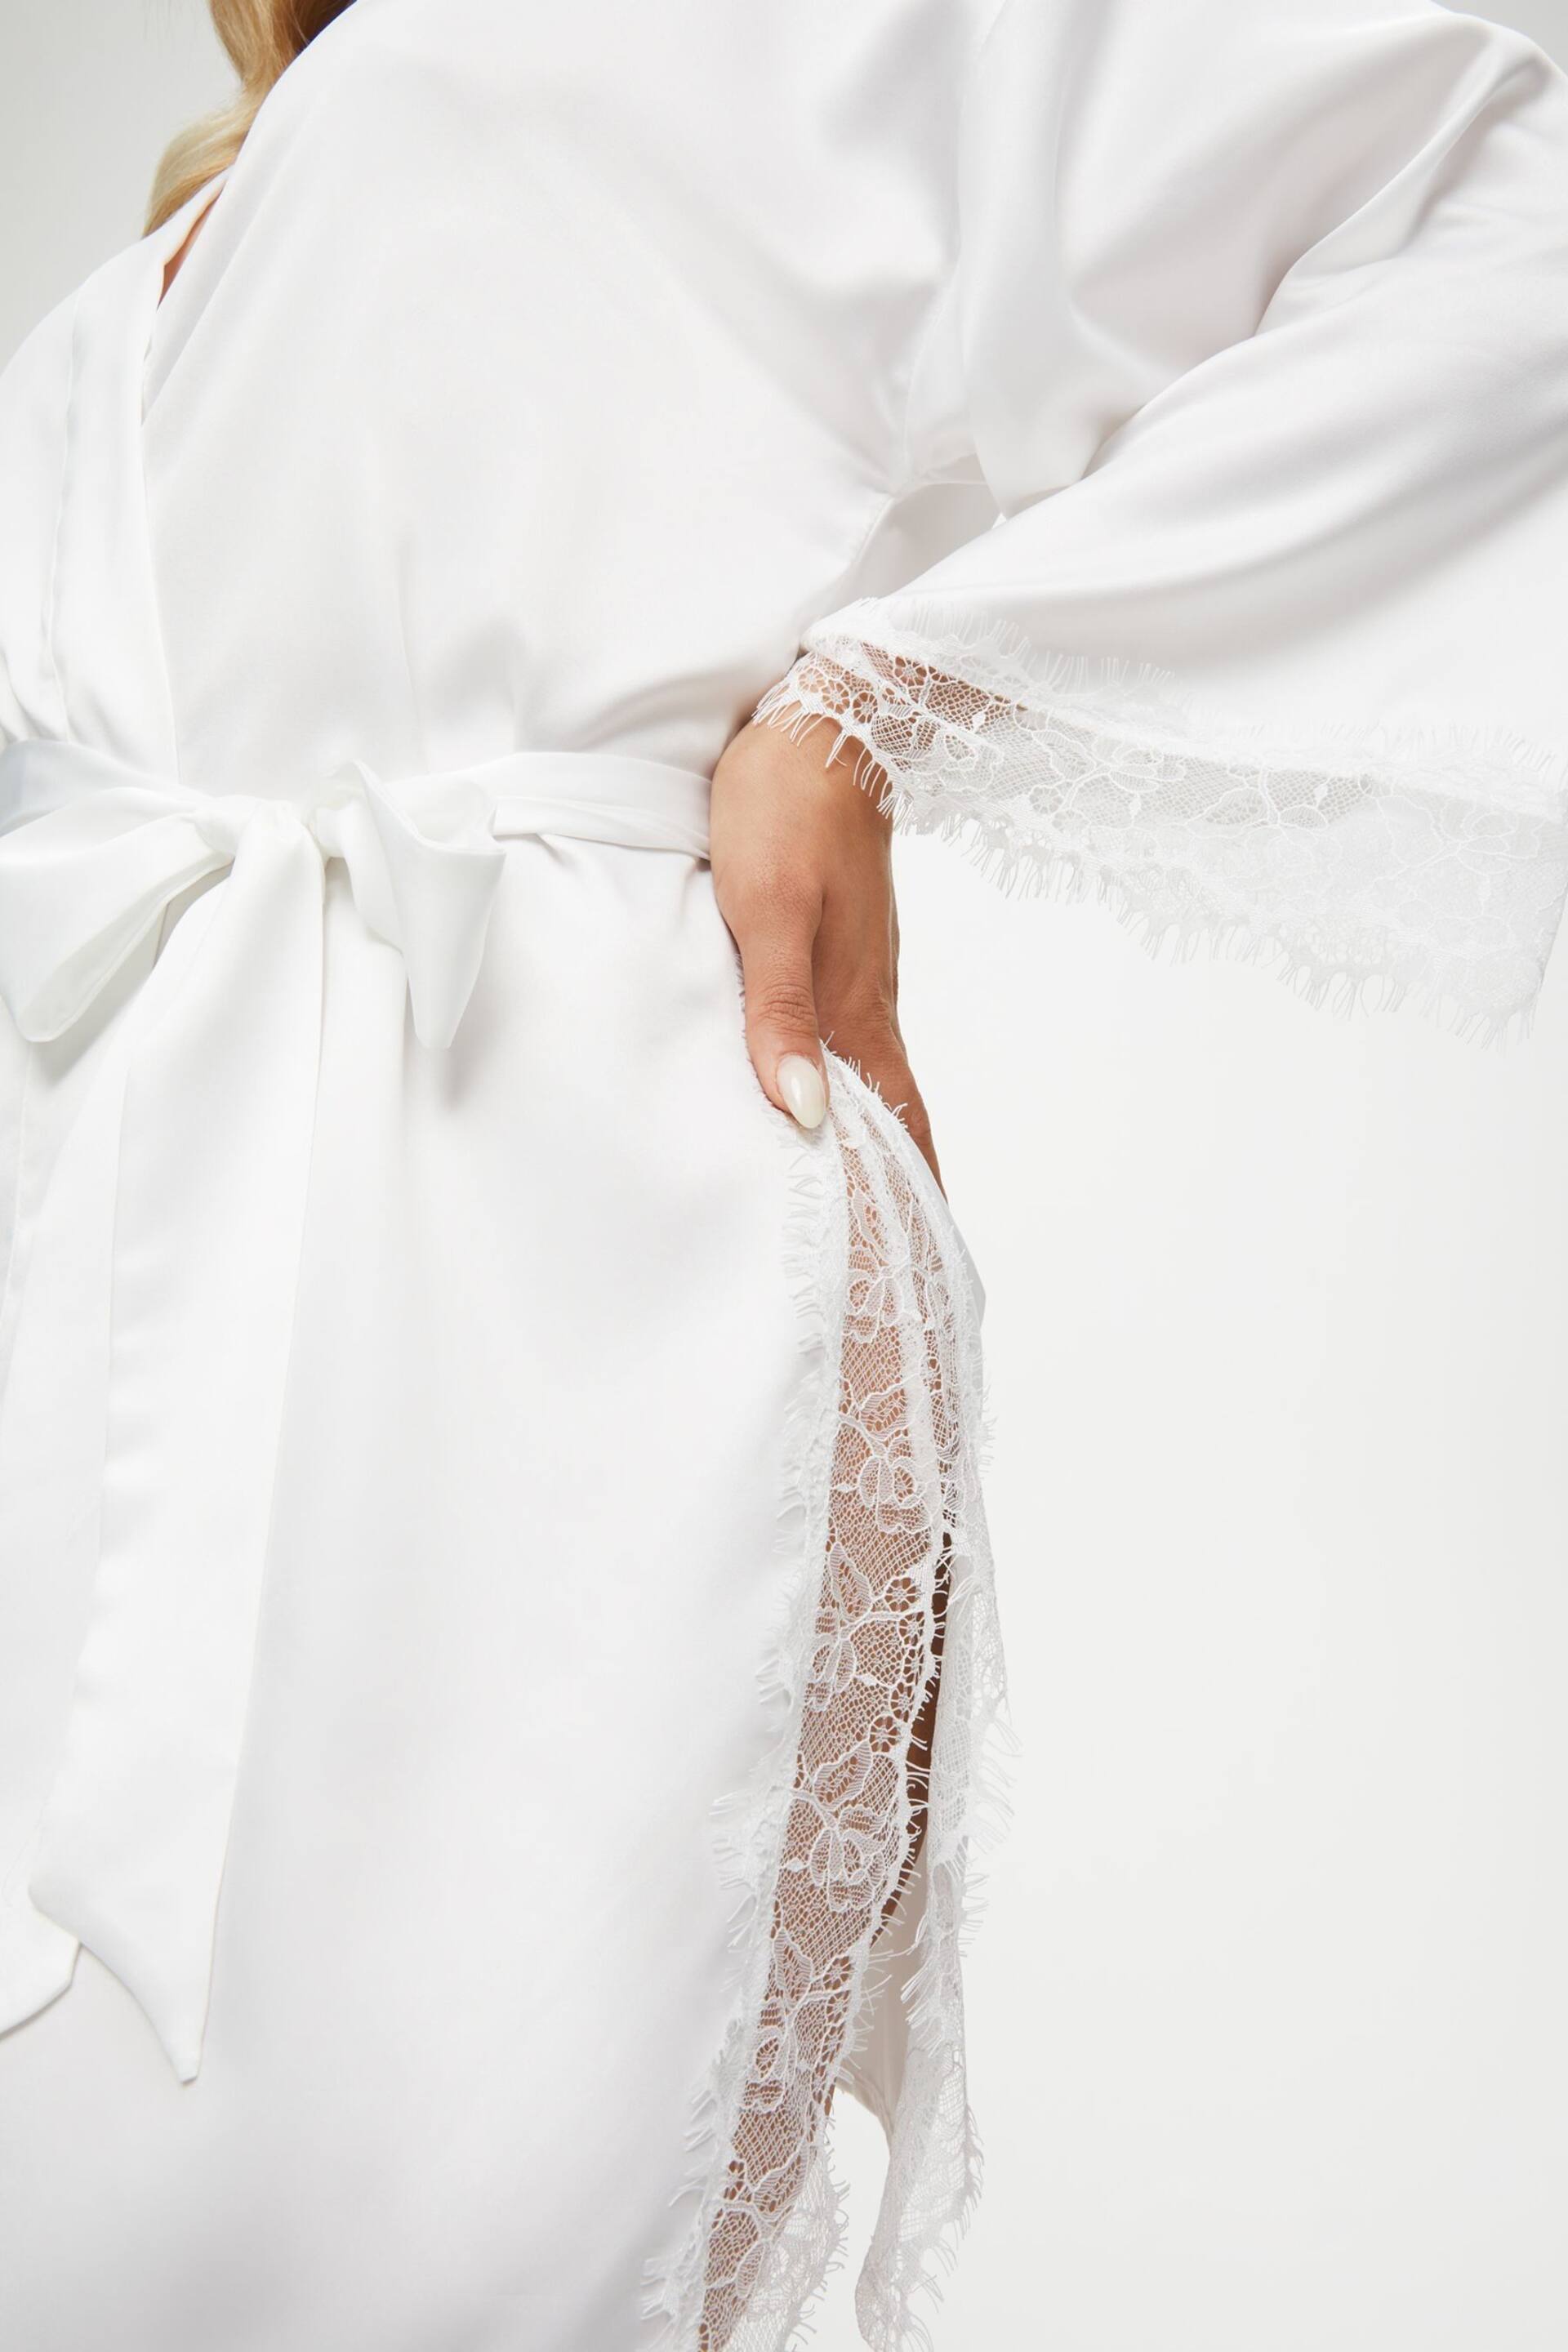 Ann Summers Cherryann Satin Robe Dressing Gown - Image 4 of 5